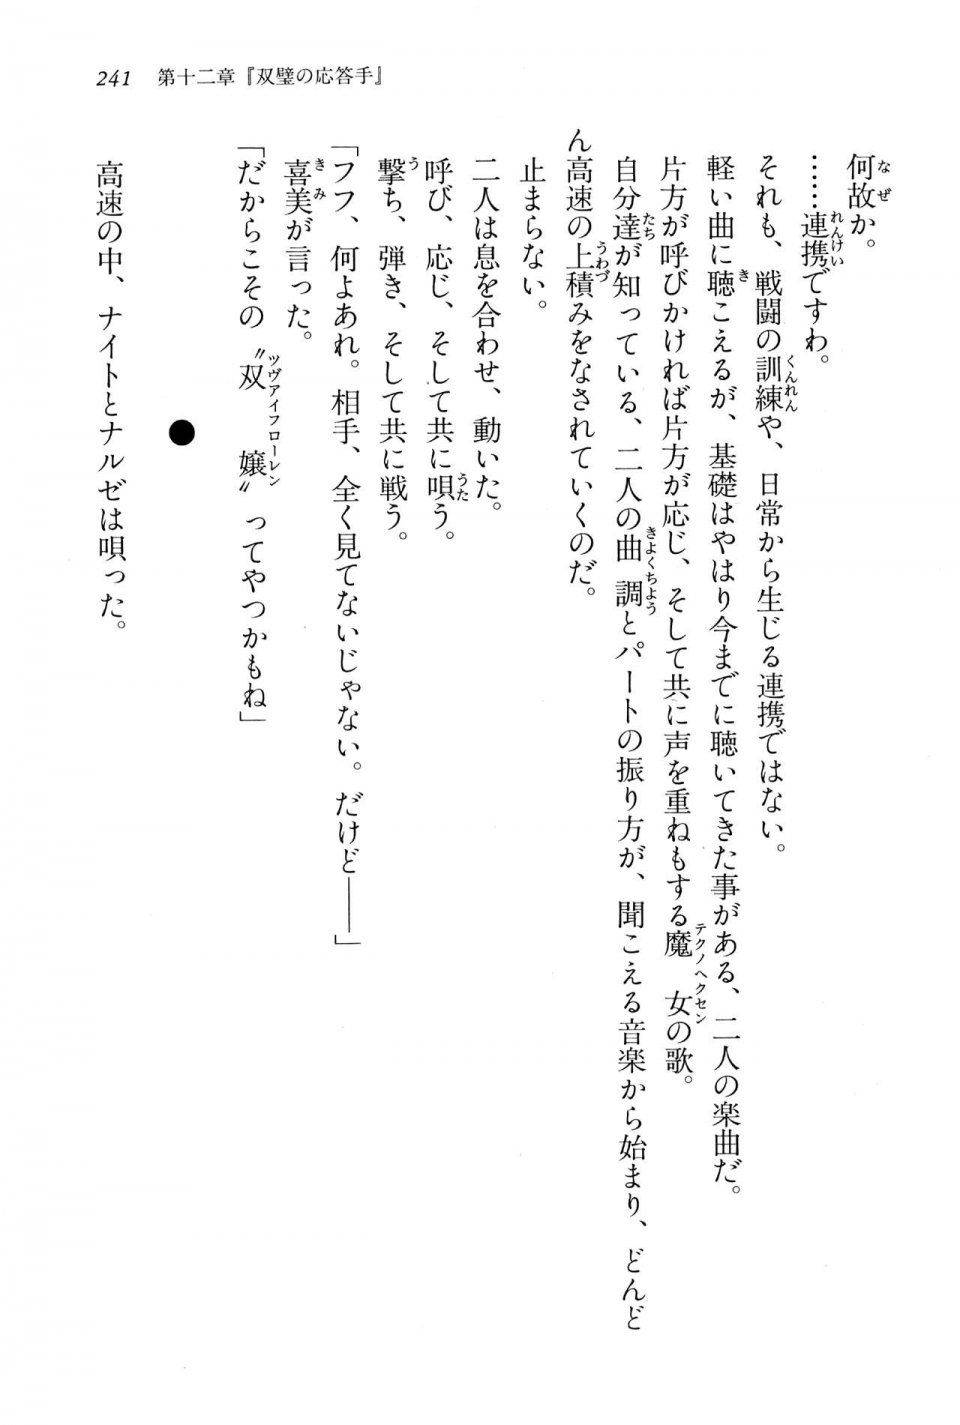 Kyoukai Senjou no Horizon BD Special Mininovel Vol 6(3B) - Photo #245